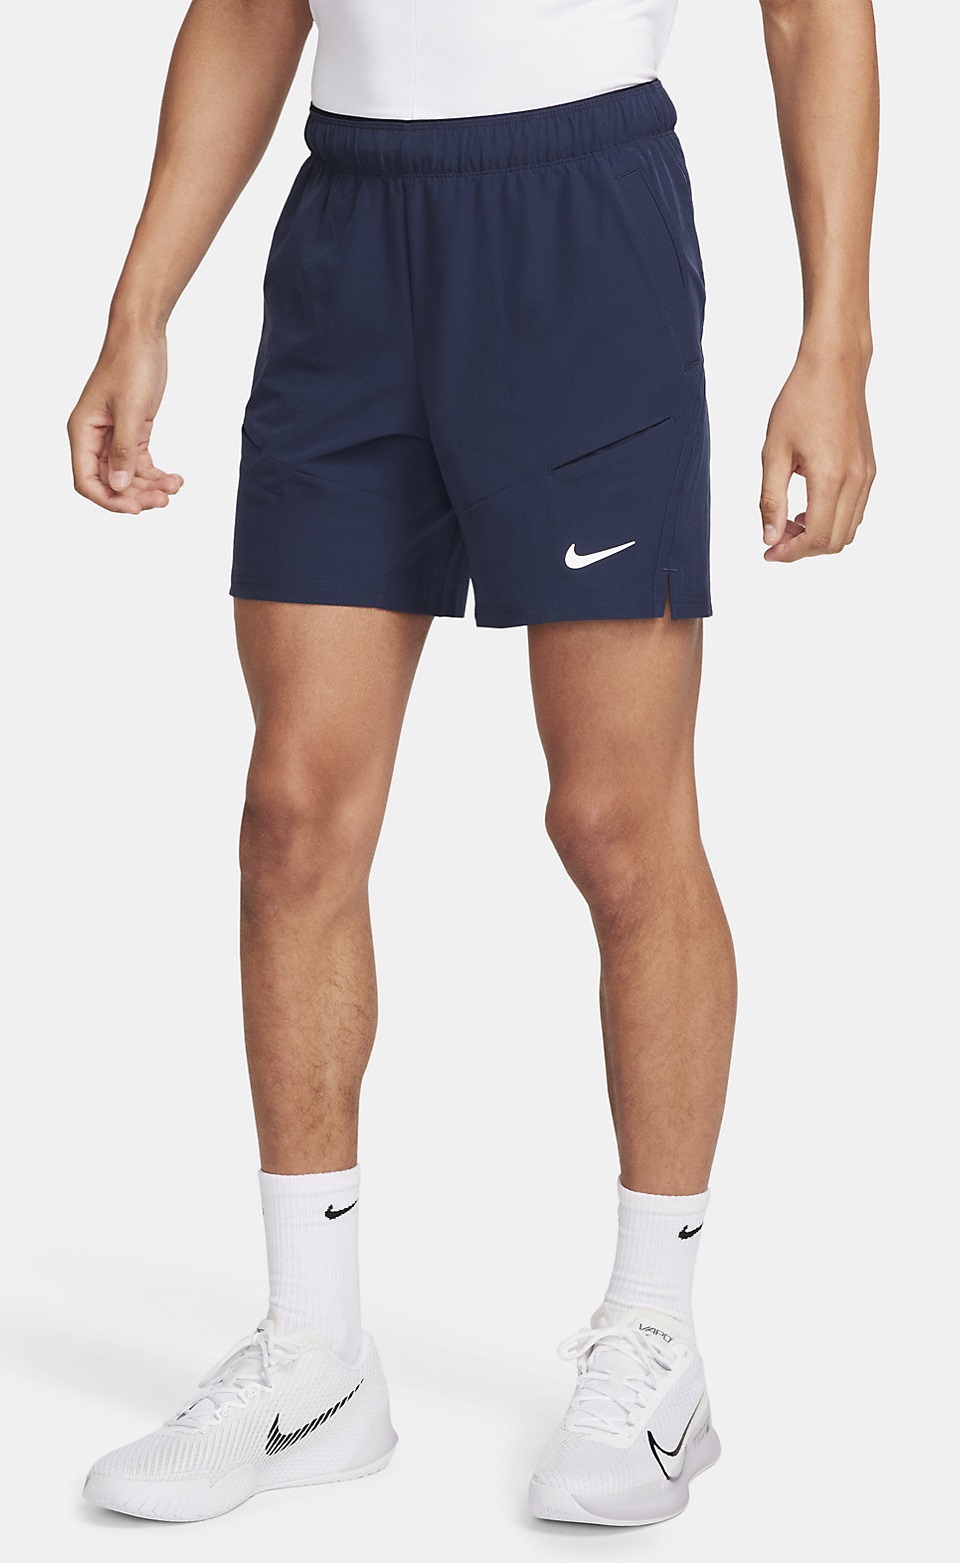 NIKE - Nike Court 7 inch Advantage Short 